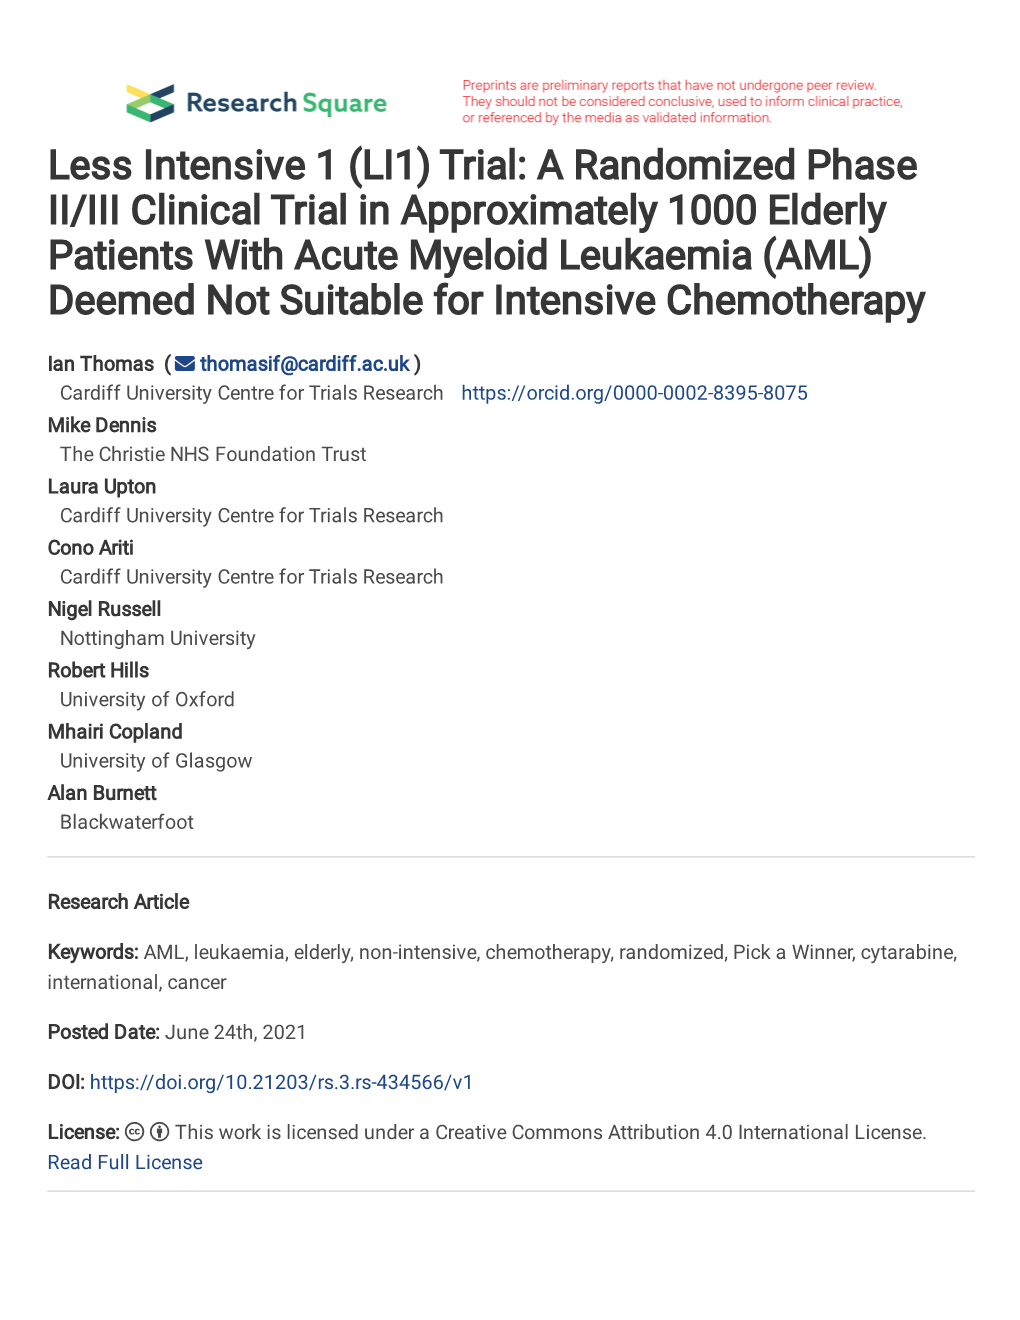 Less Intensive 1 (LI1) Trial: a Randomized Phase